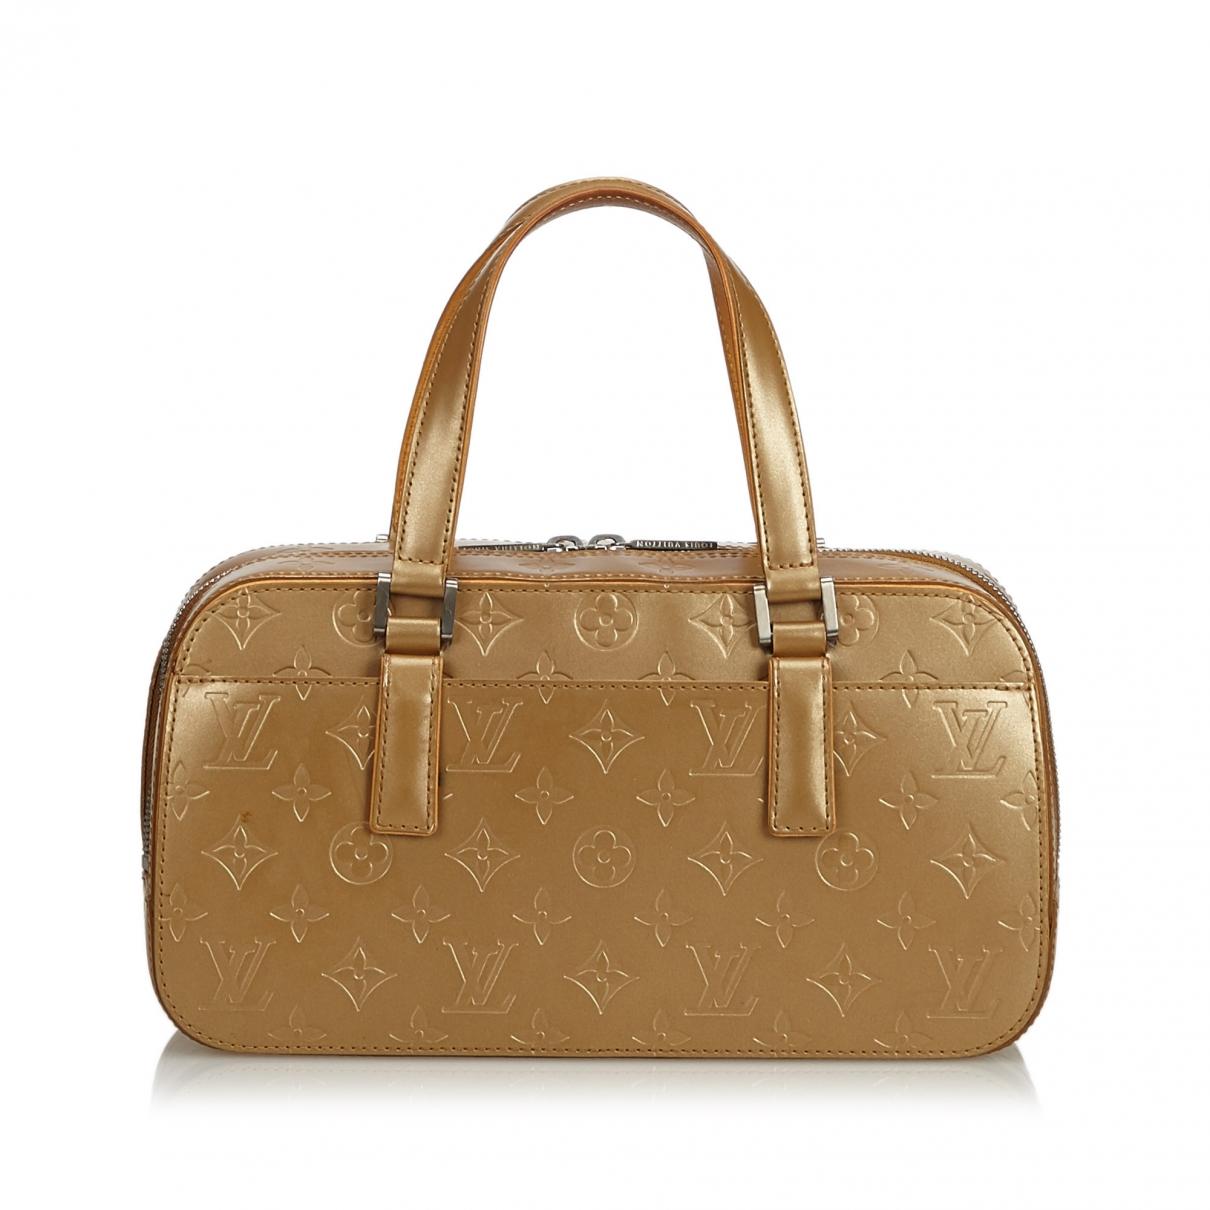 Lyst - Louis Vuitton Vintage Gold Patent Leather Handbag in Metallic